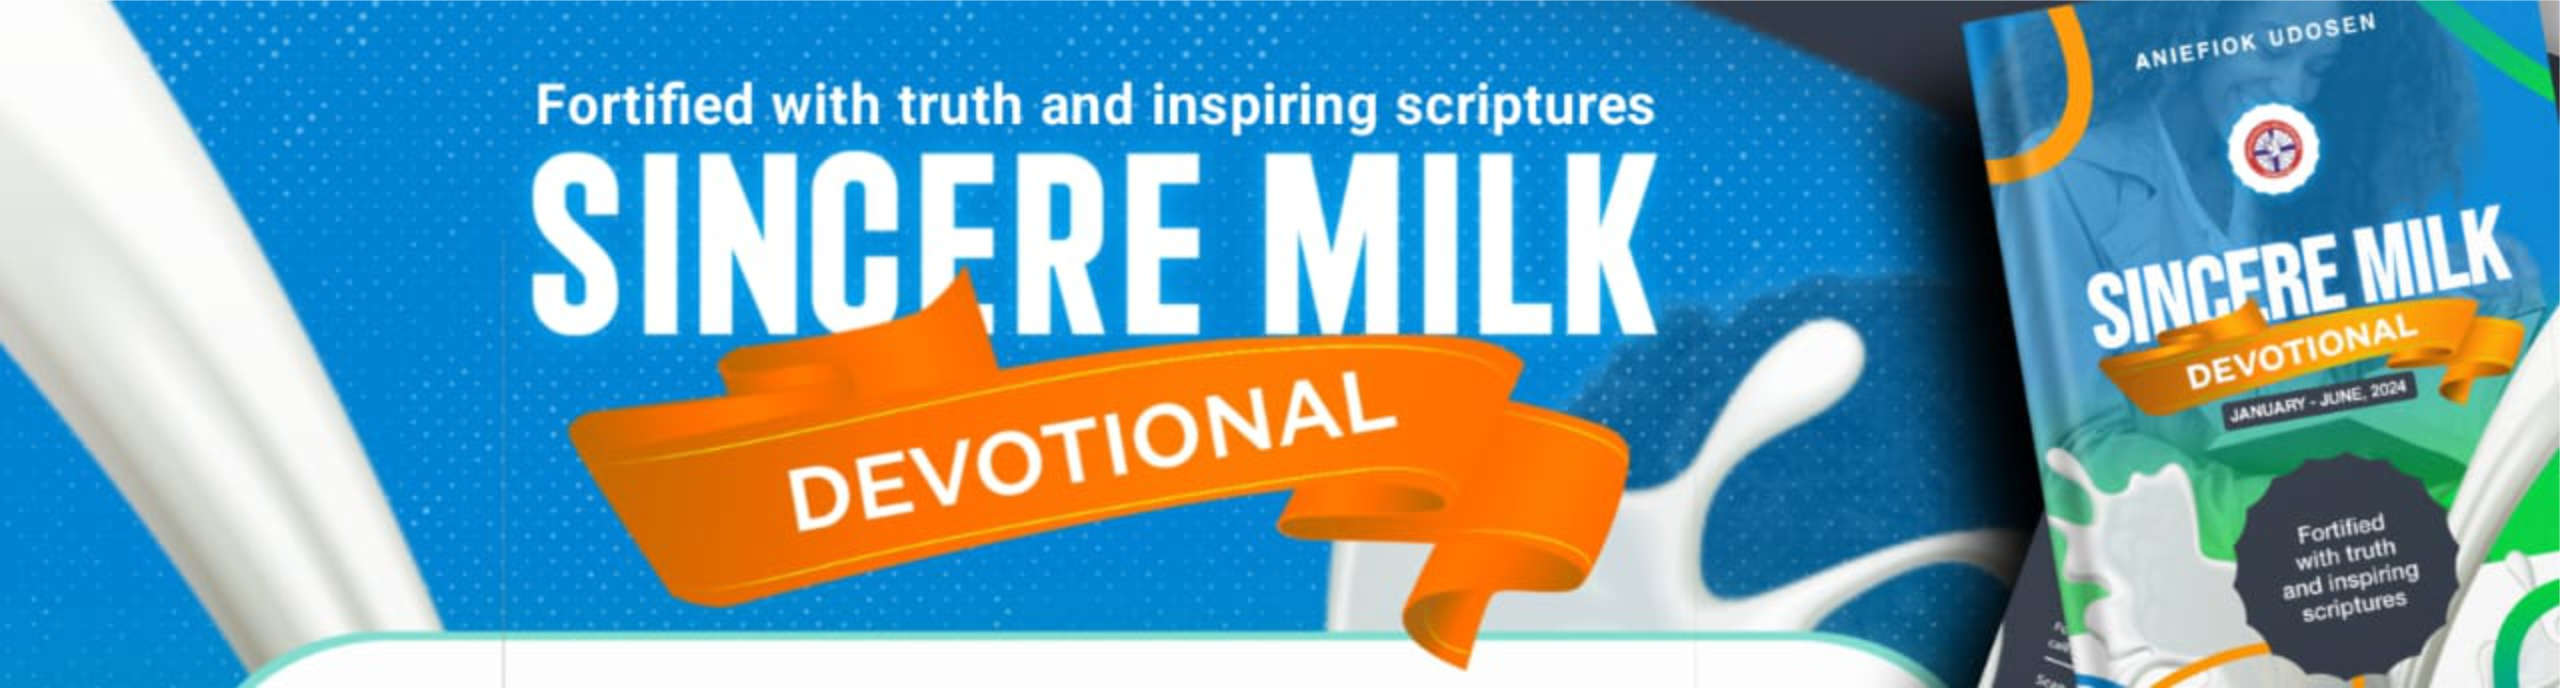 Sincere Milk Devotional Banner